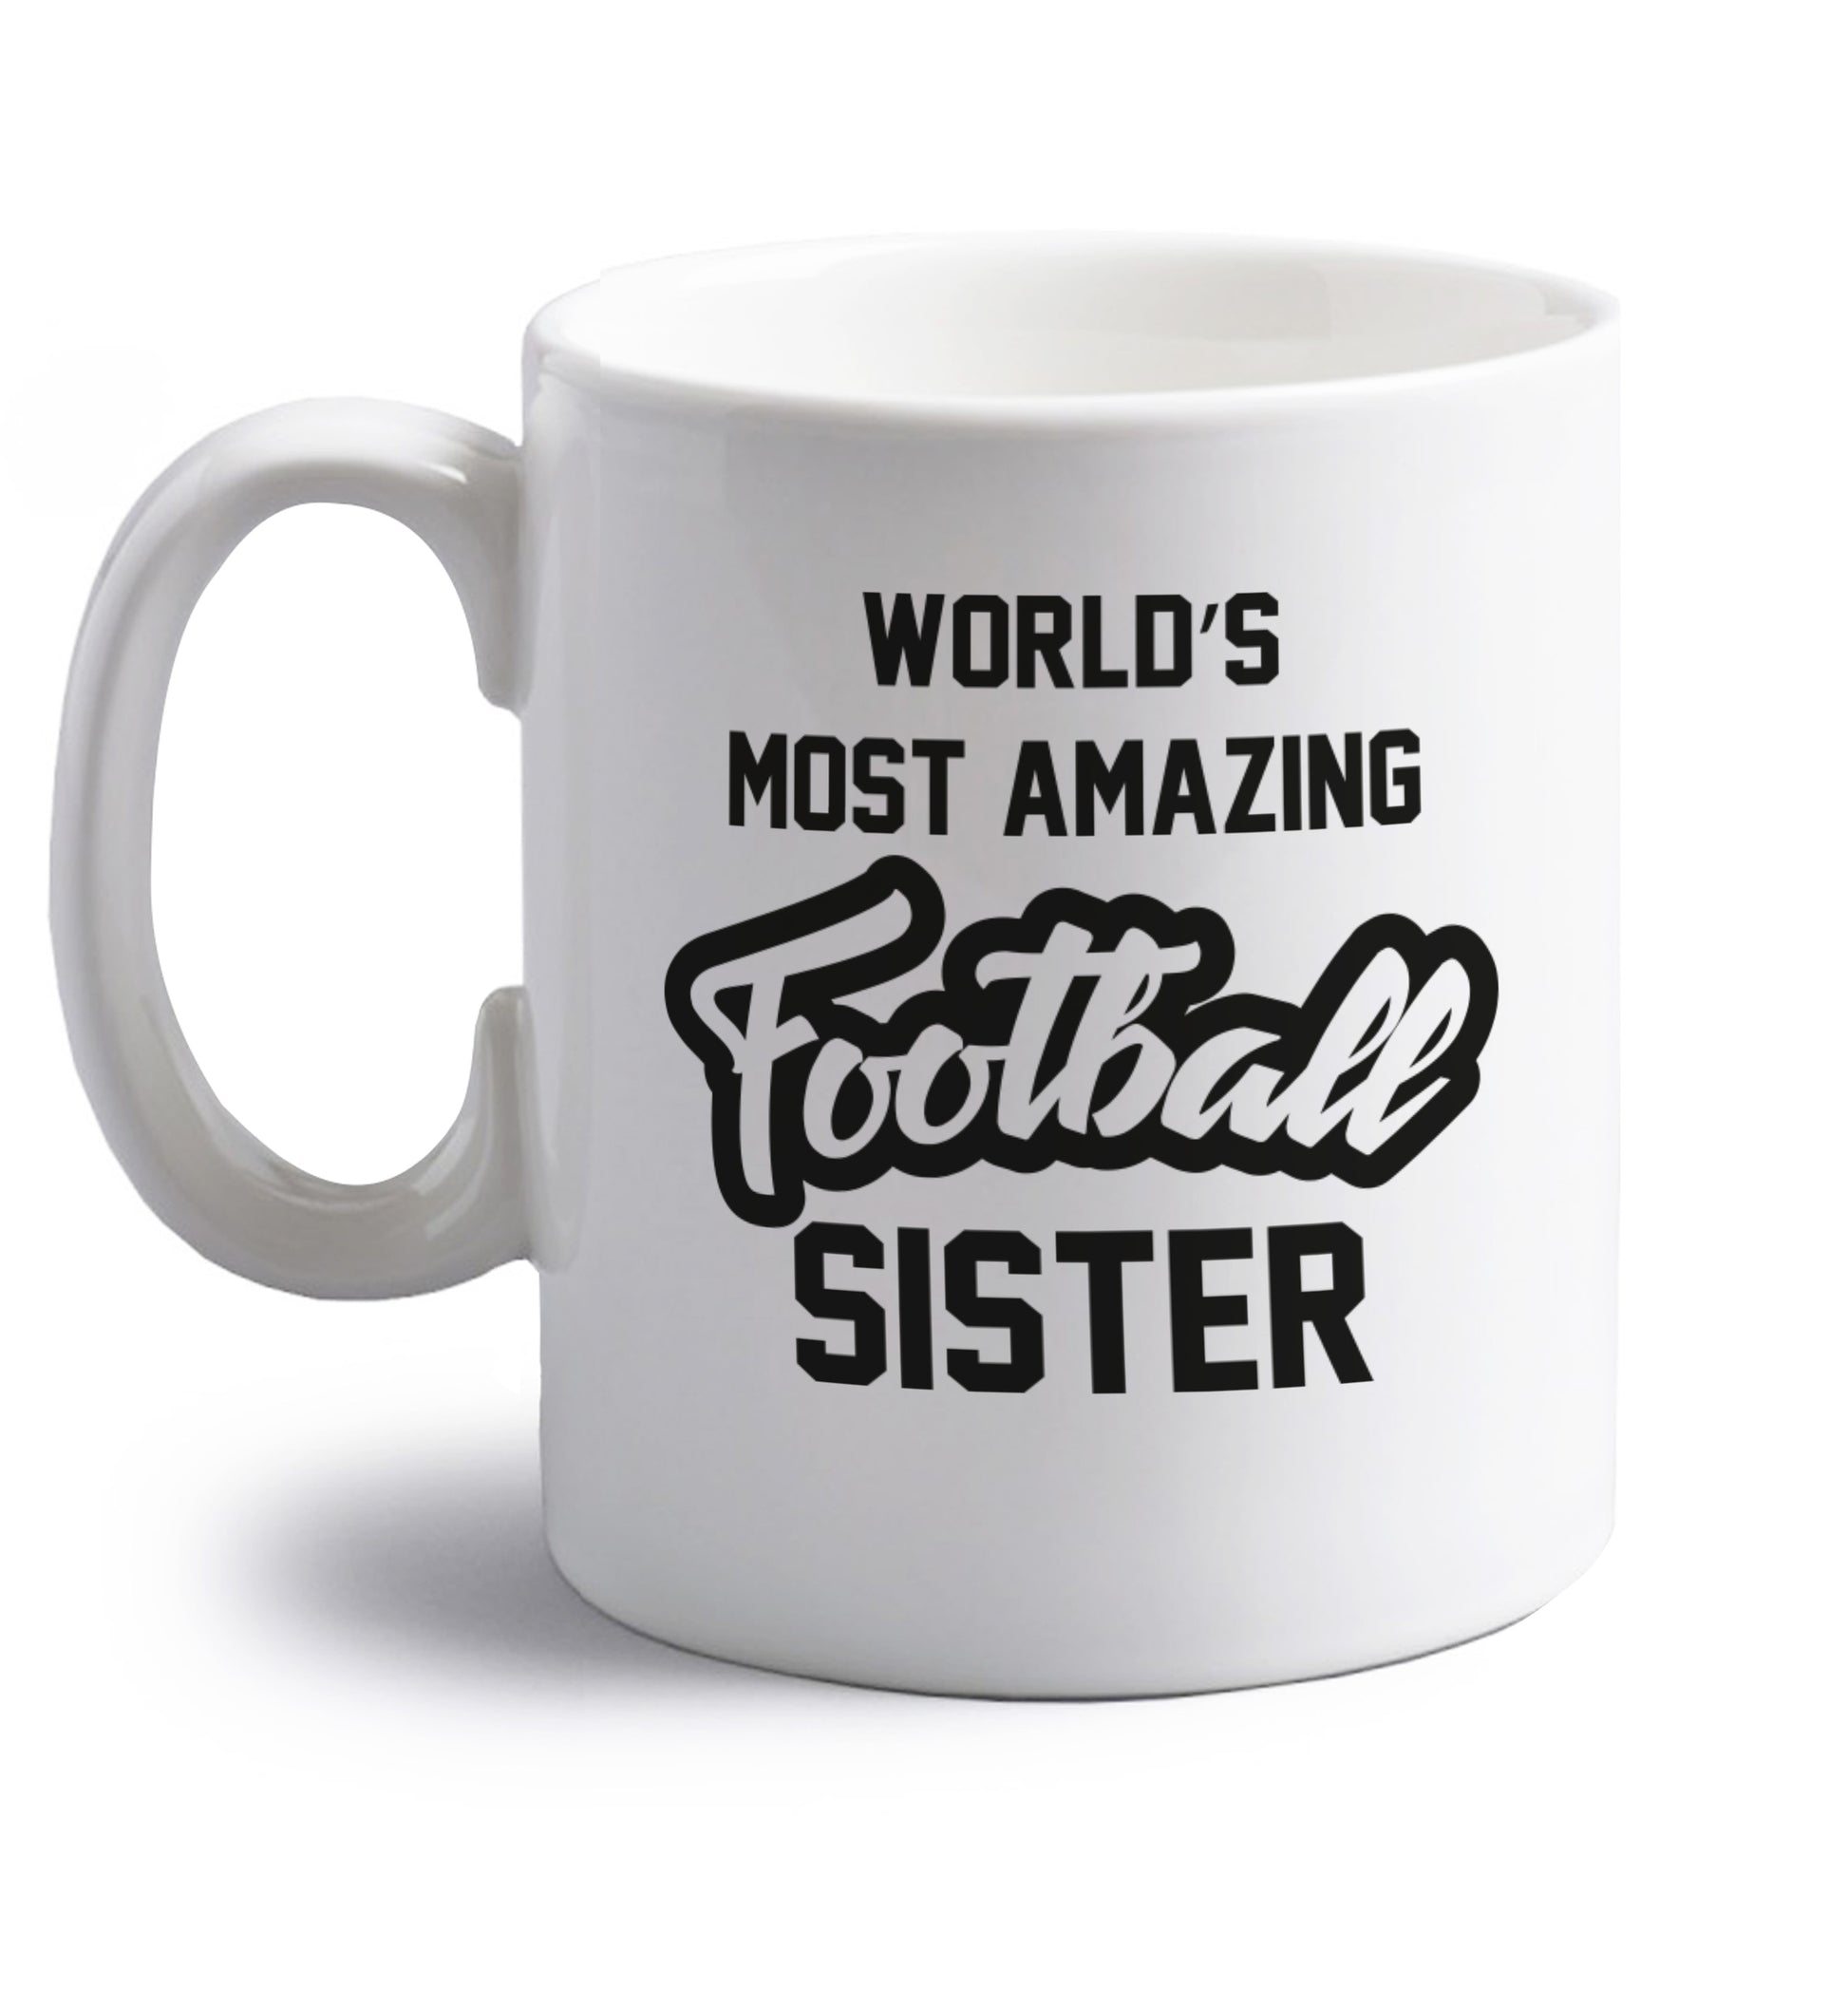 Worlds most amazing football sister right handed white ceramic mug 